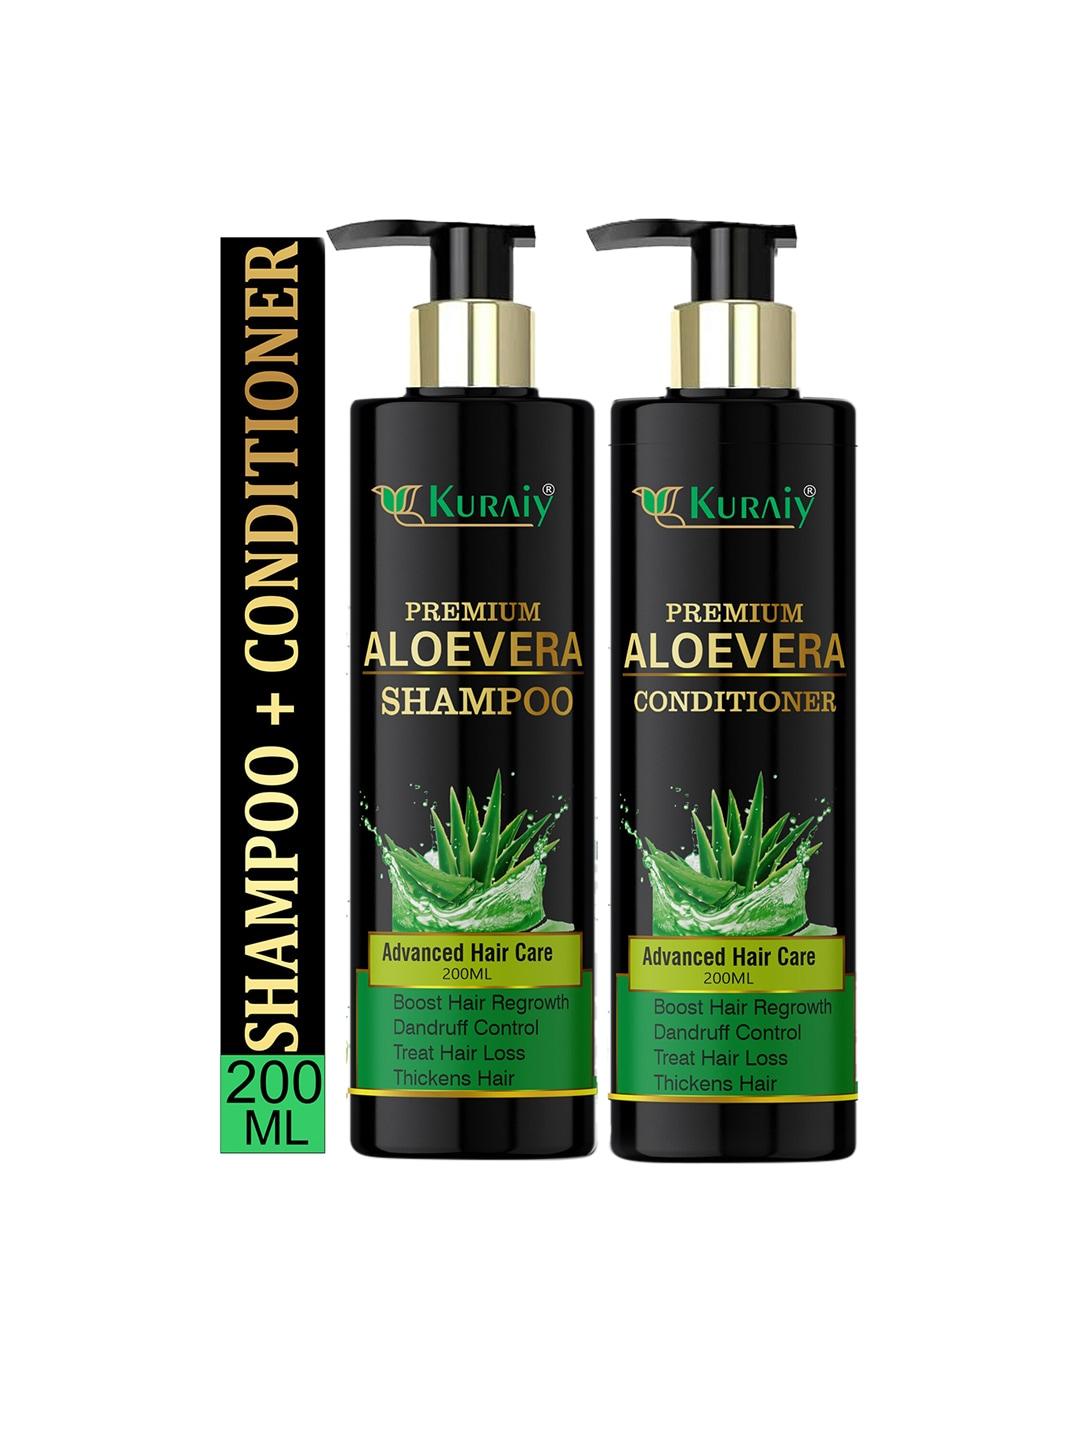 KURAIY Set of Natural Aloe Vera Shampoo & Conditioner - 200ml each